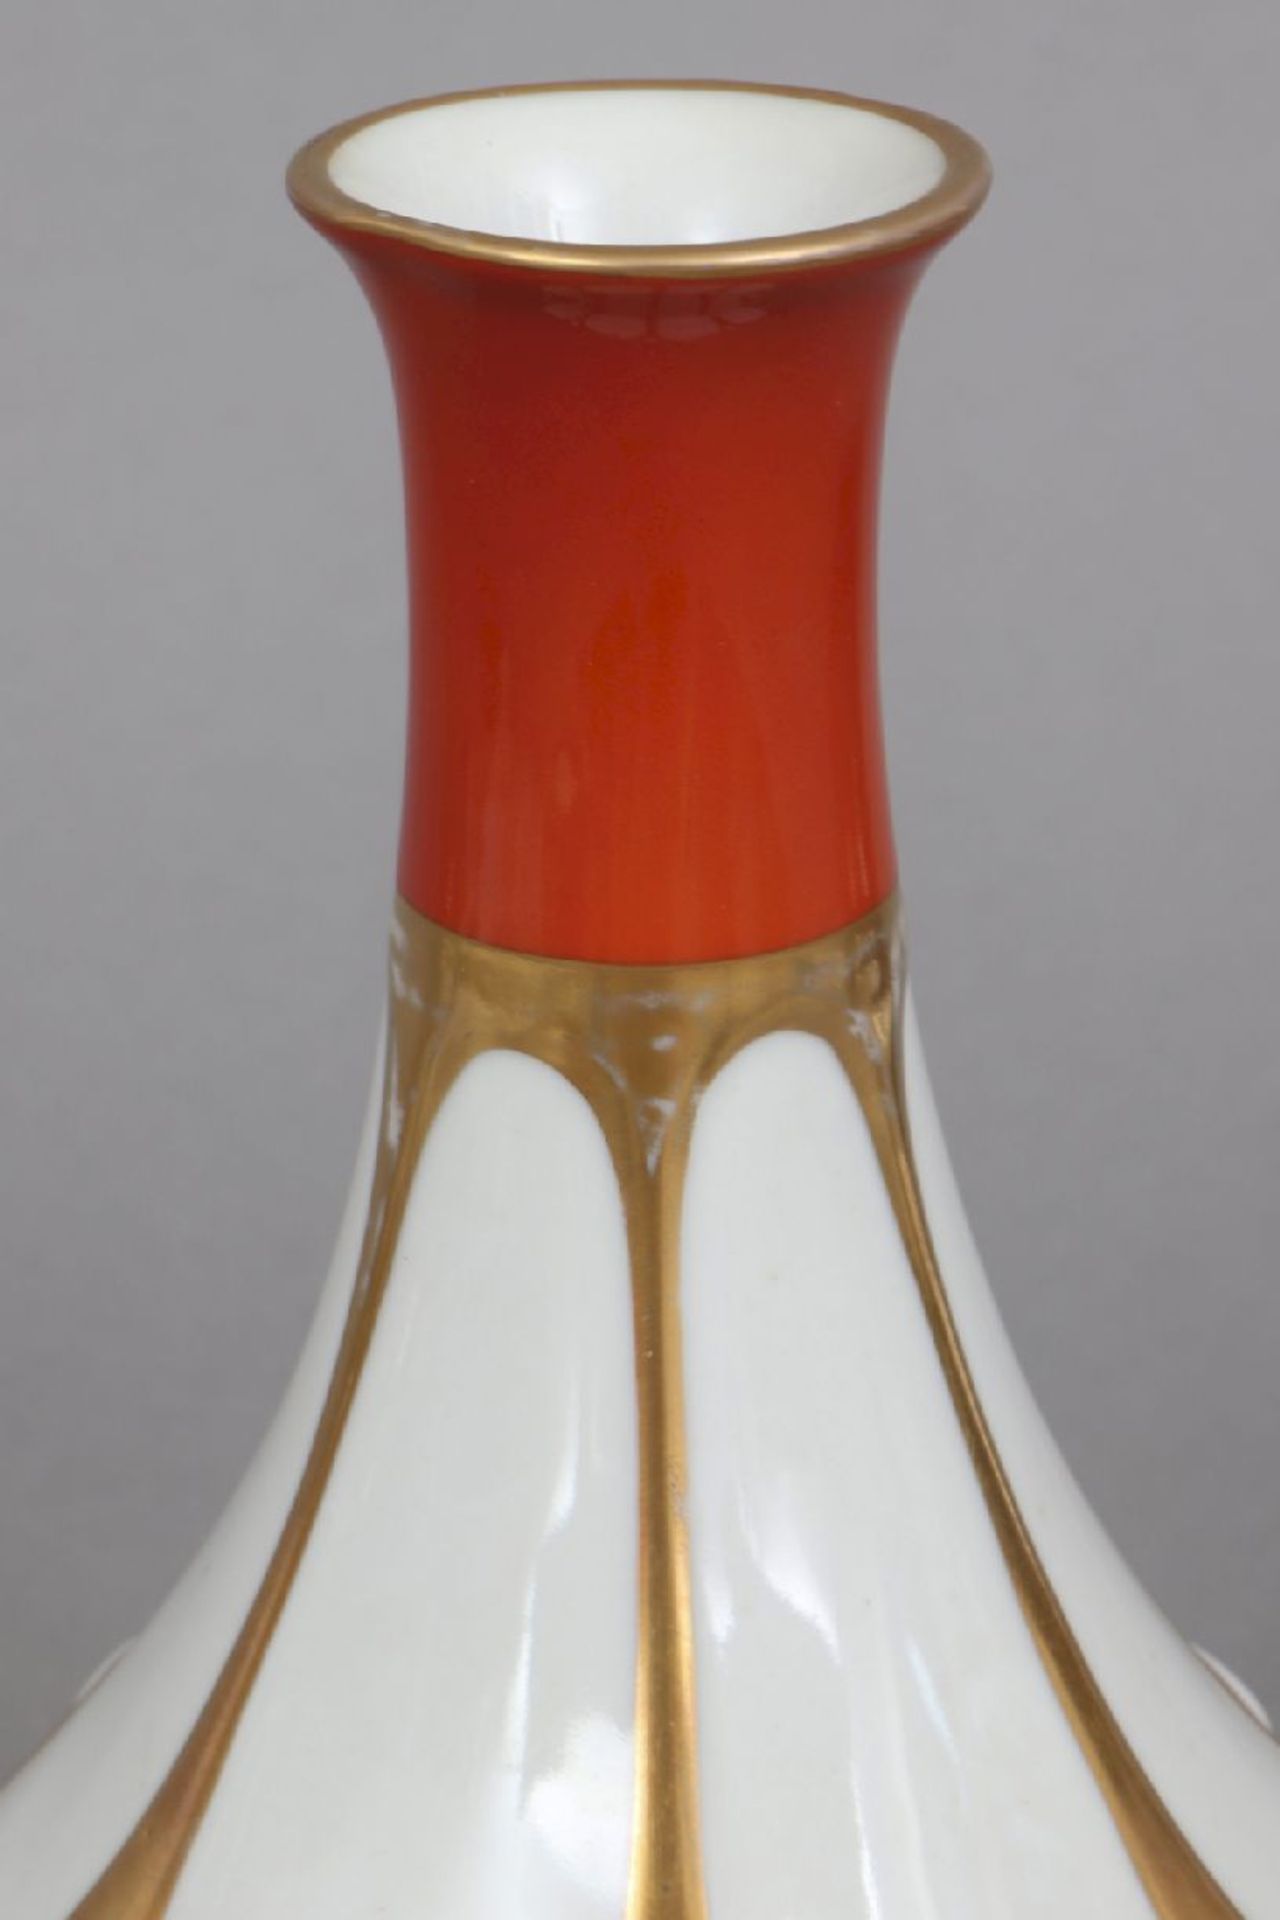 METZLER & ORTLOFF Porzellan-Vase1920-1930er Jahre, orange-roter Fond, Golddekor, keulenförmiger - Bild 3 aus 5